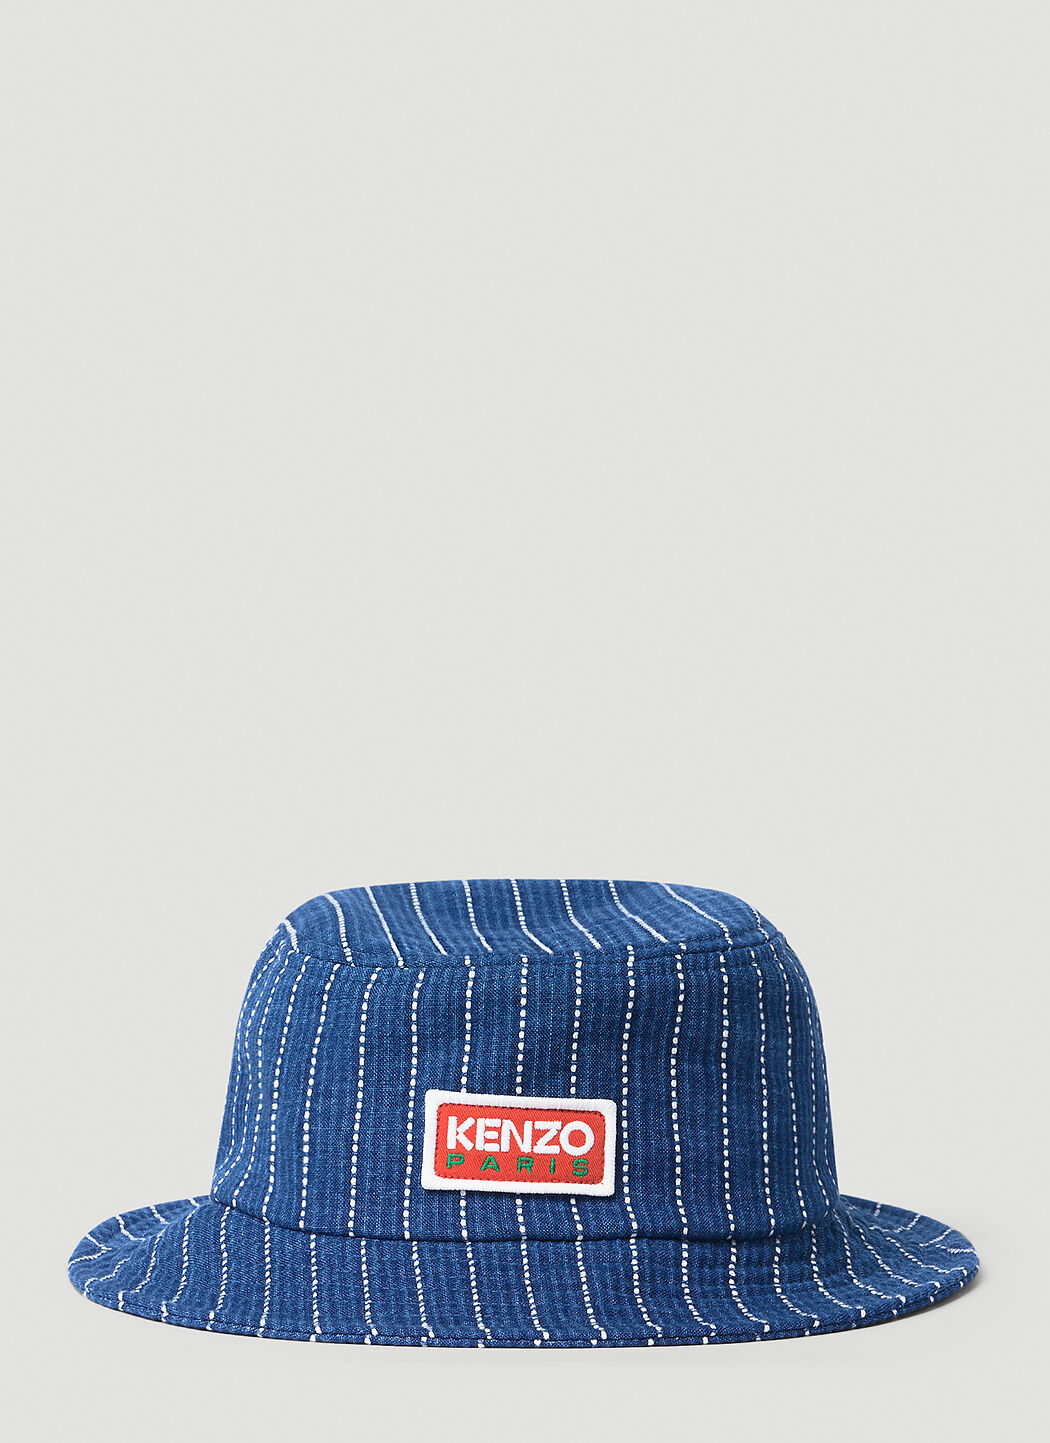 Kenzo x Levi's 徽标印花牛仔条纹渔夫帽 蓝色 klv0156002